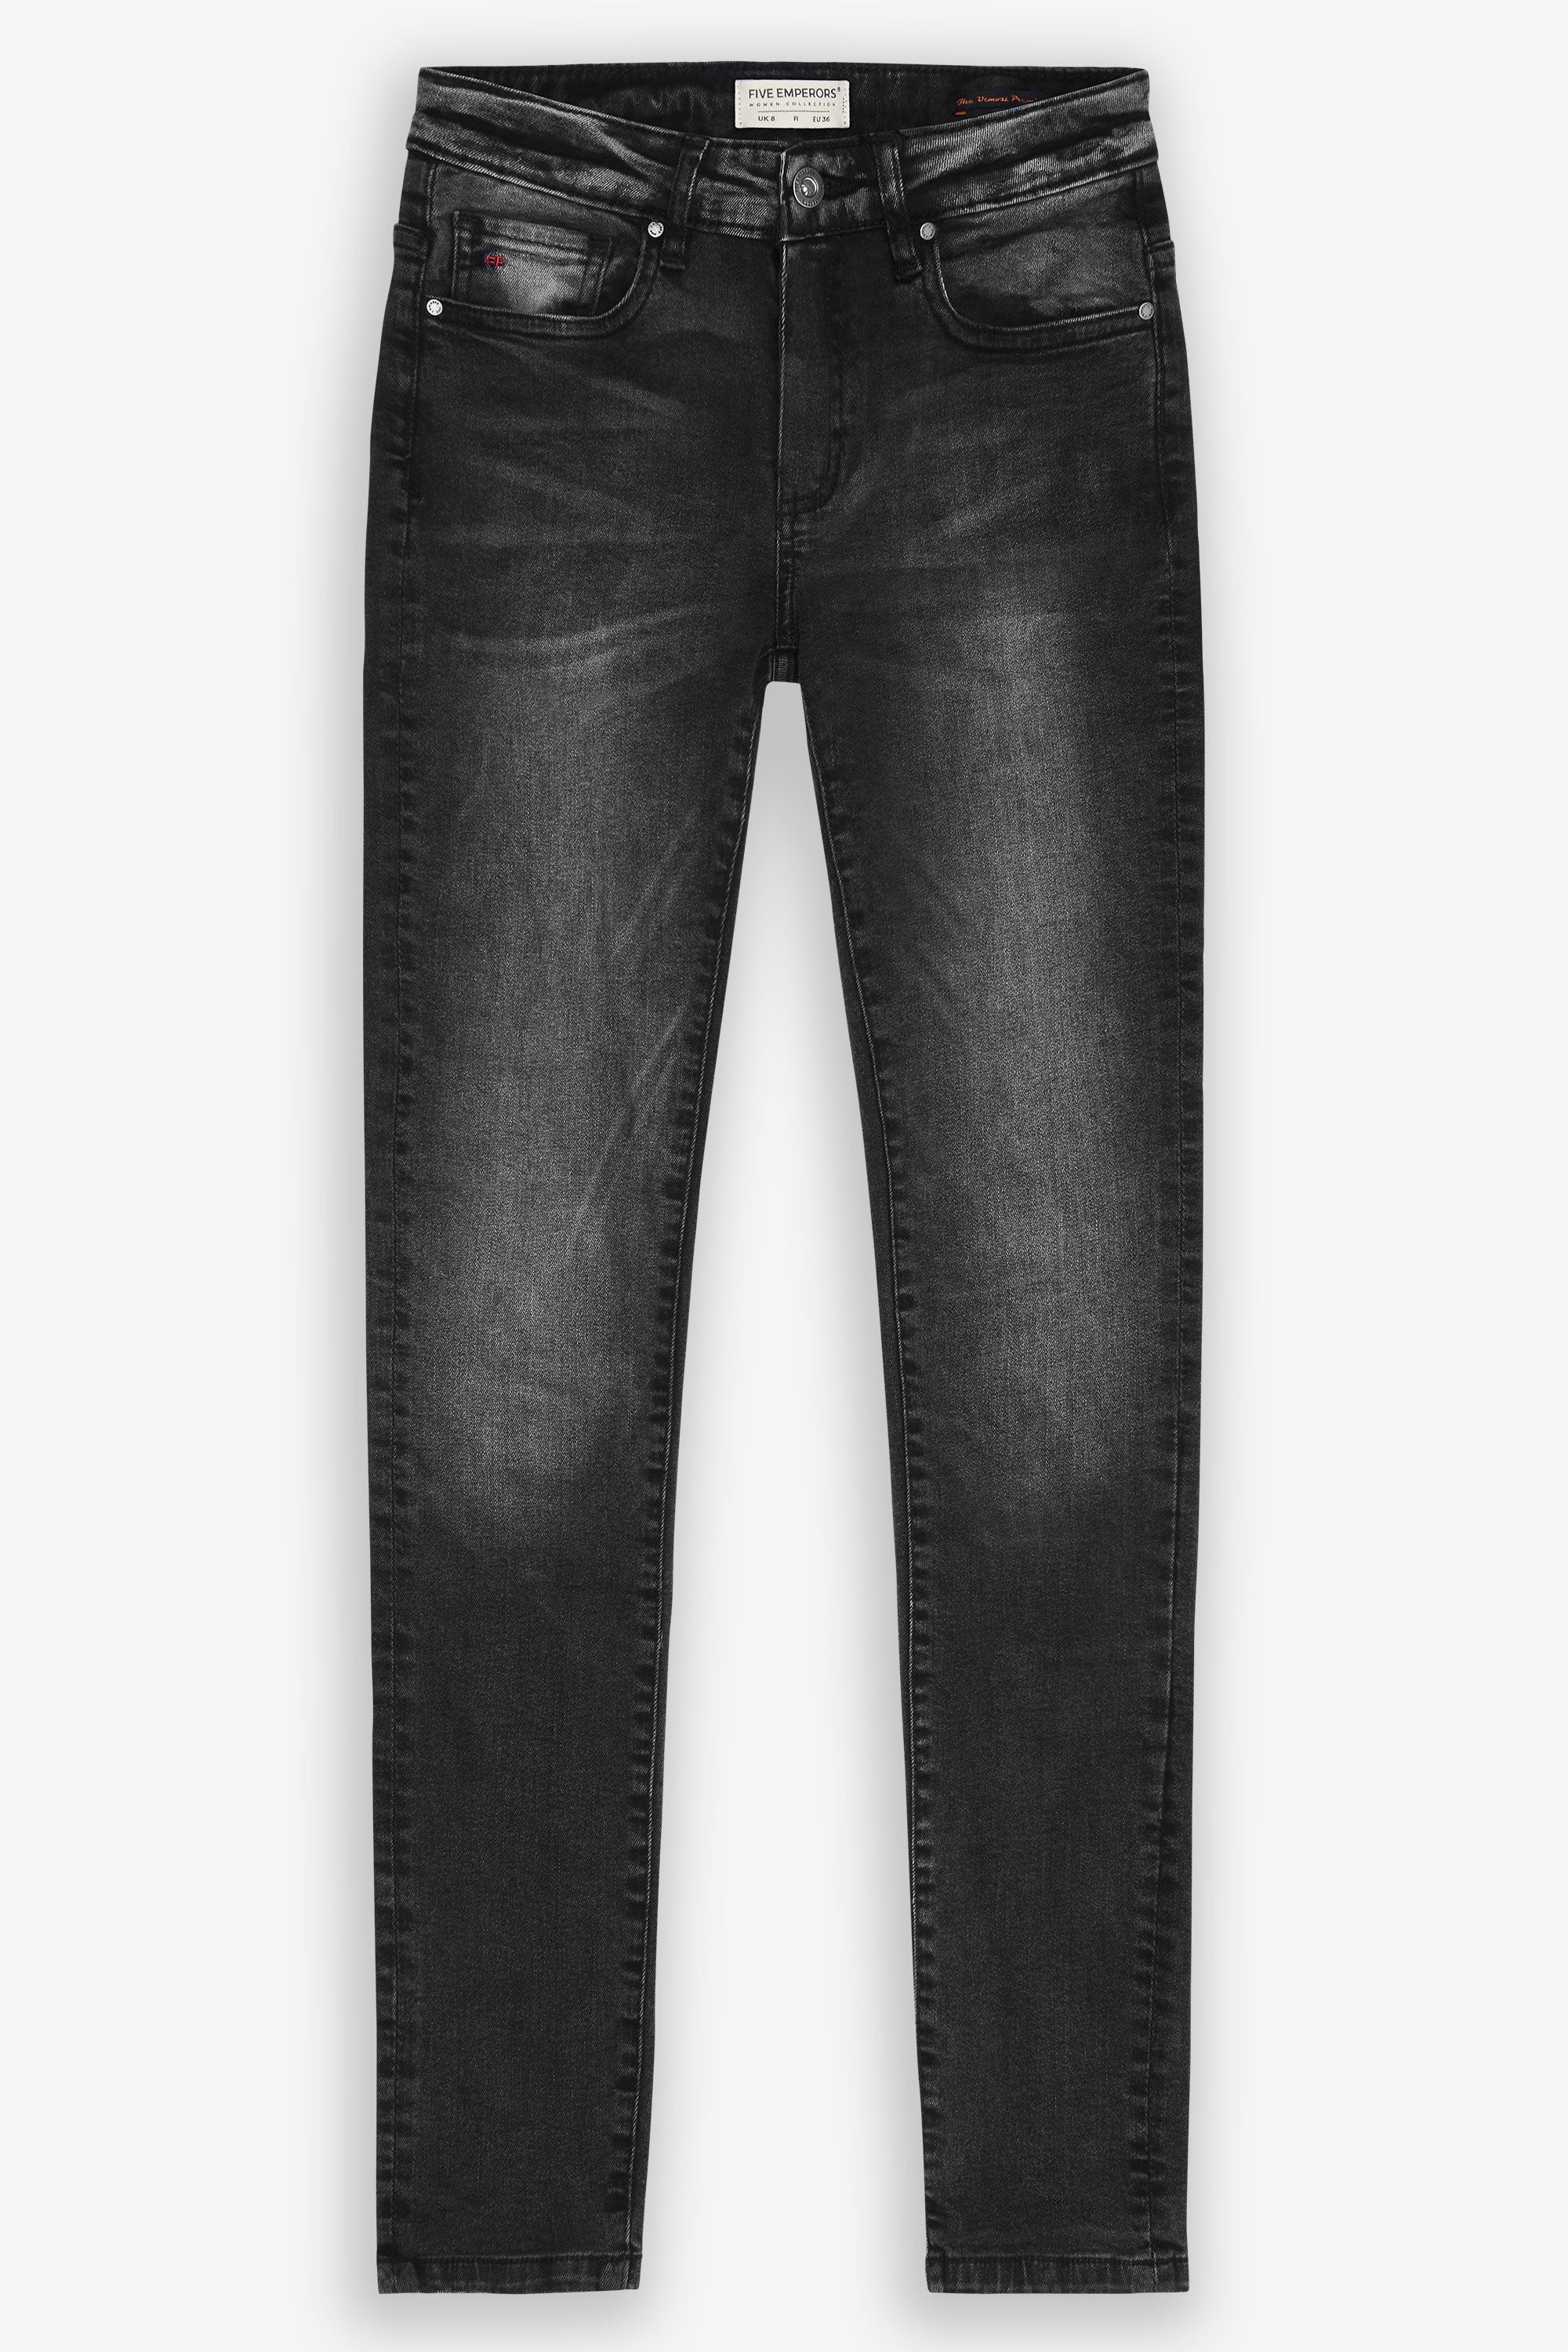 Vintage Mens Faded Black Jeans 90s Black Denim Jeans Mens Size 34x32 34  Waist 32 Inseam - Etsy